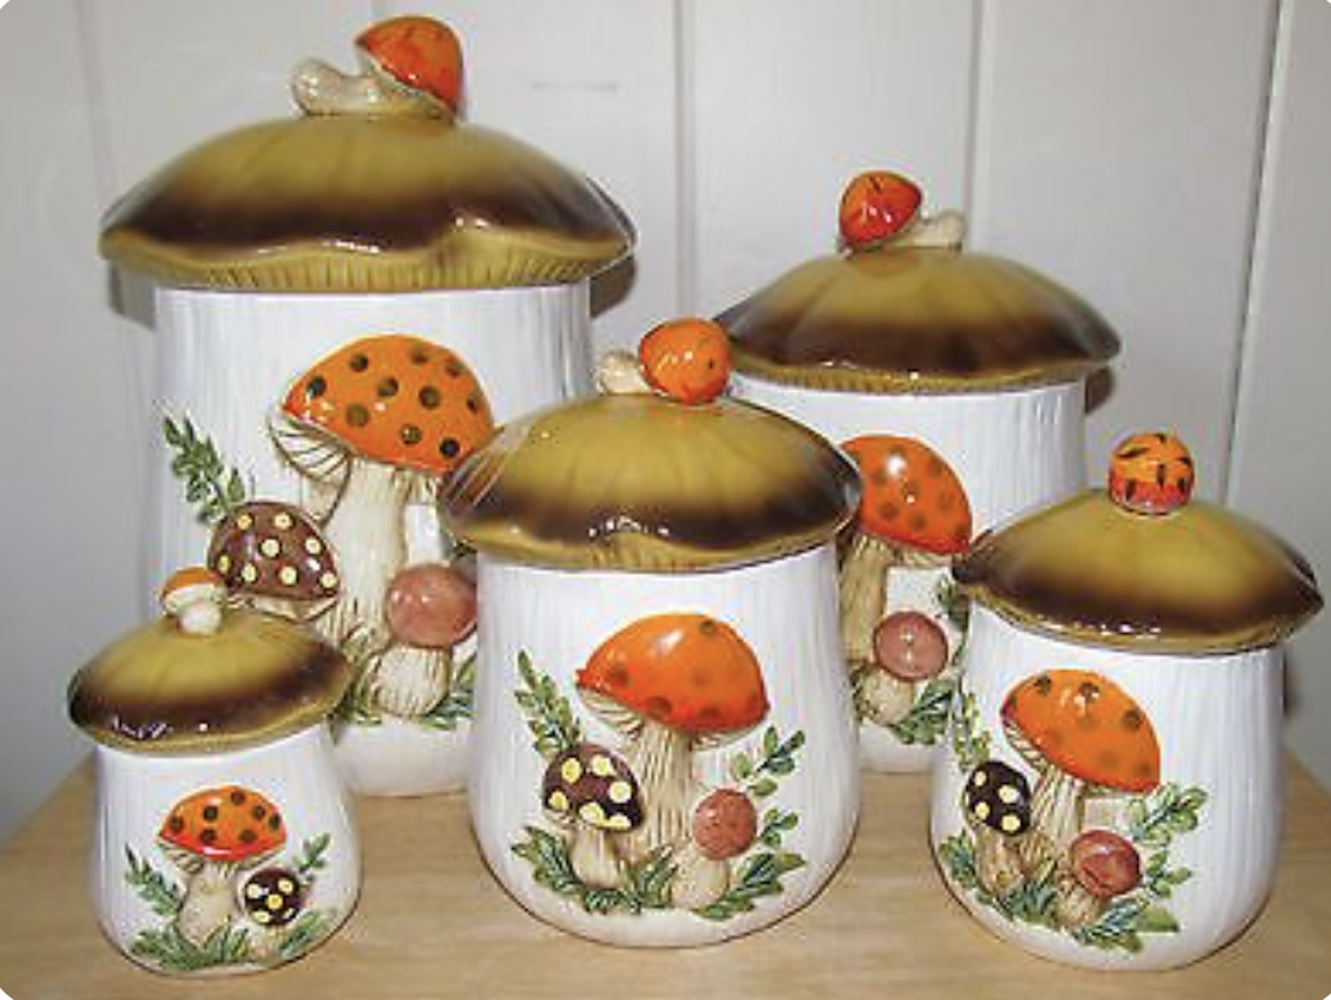 Mushroom canister